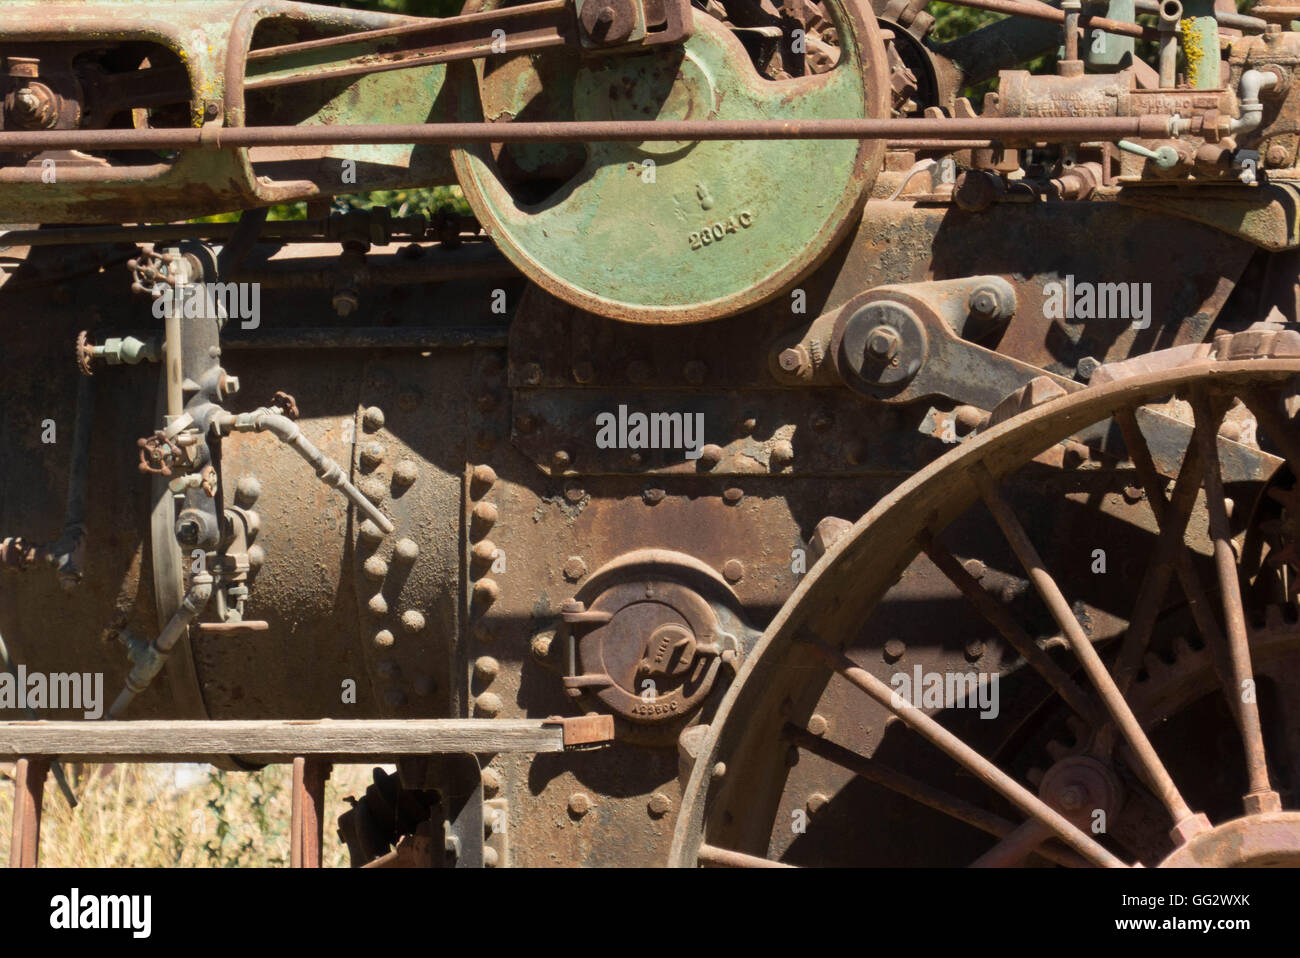 automotive graveyard,machine engines,engine parts,gears,old vintage parts Stock Photo